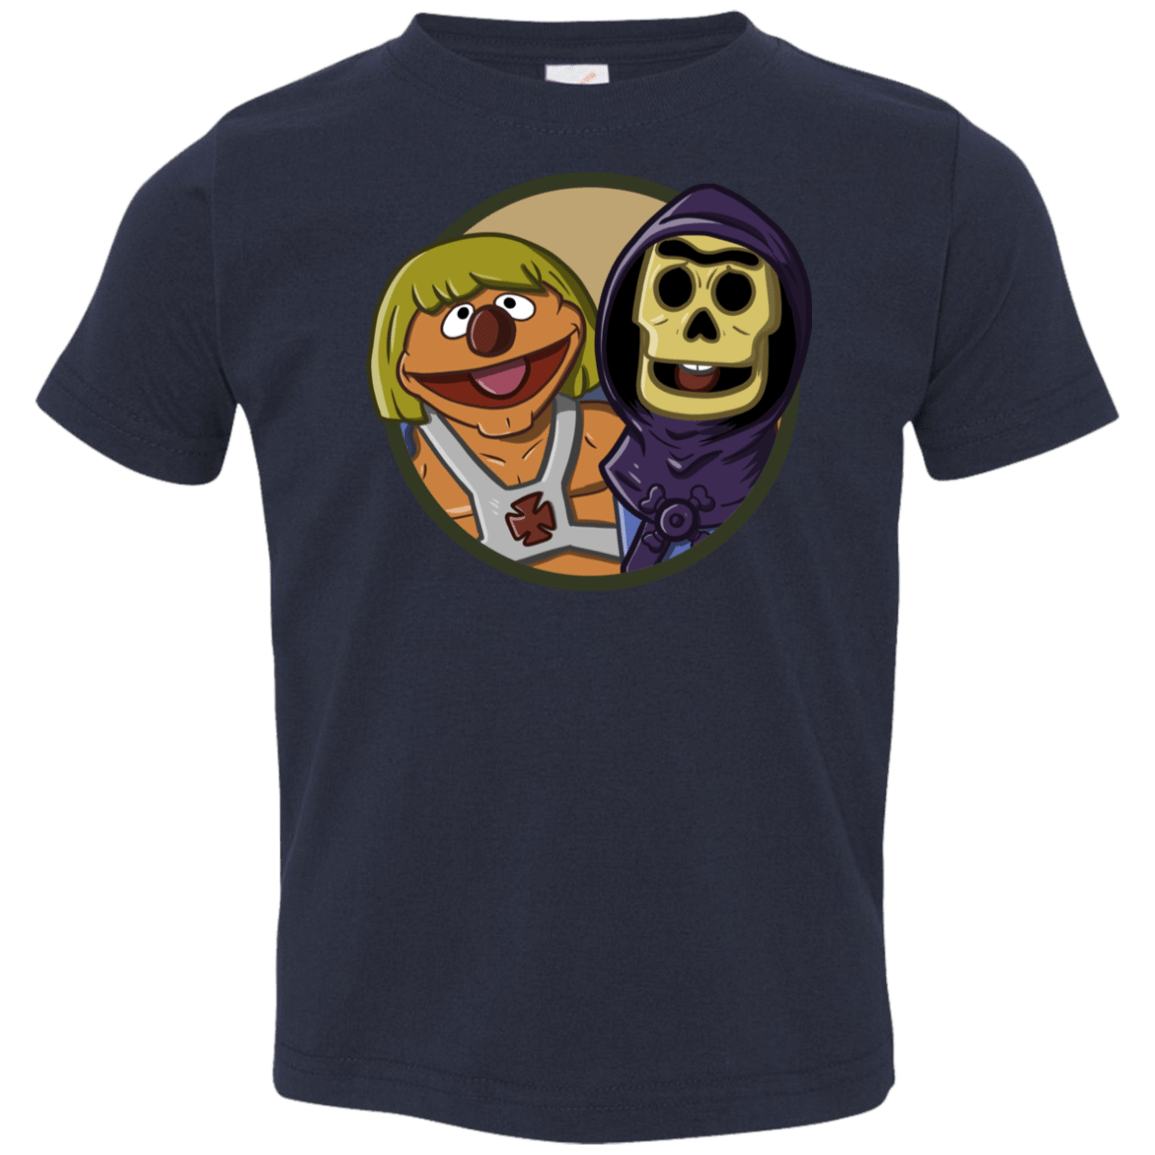 T-Shirts Navy / 2T Bert and Ernie Toddler Premium T-Shirt